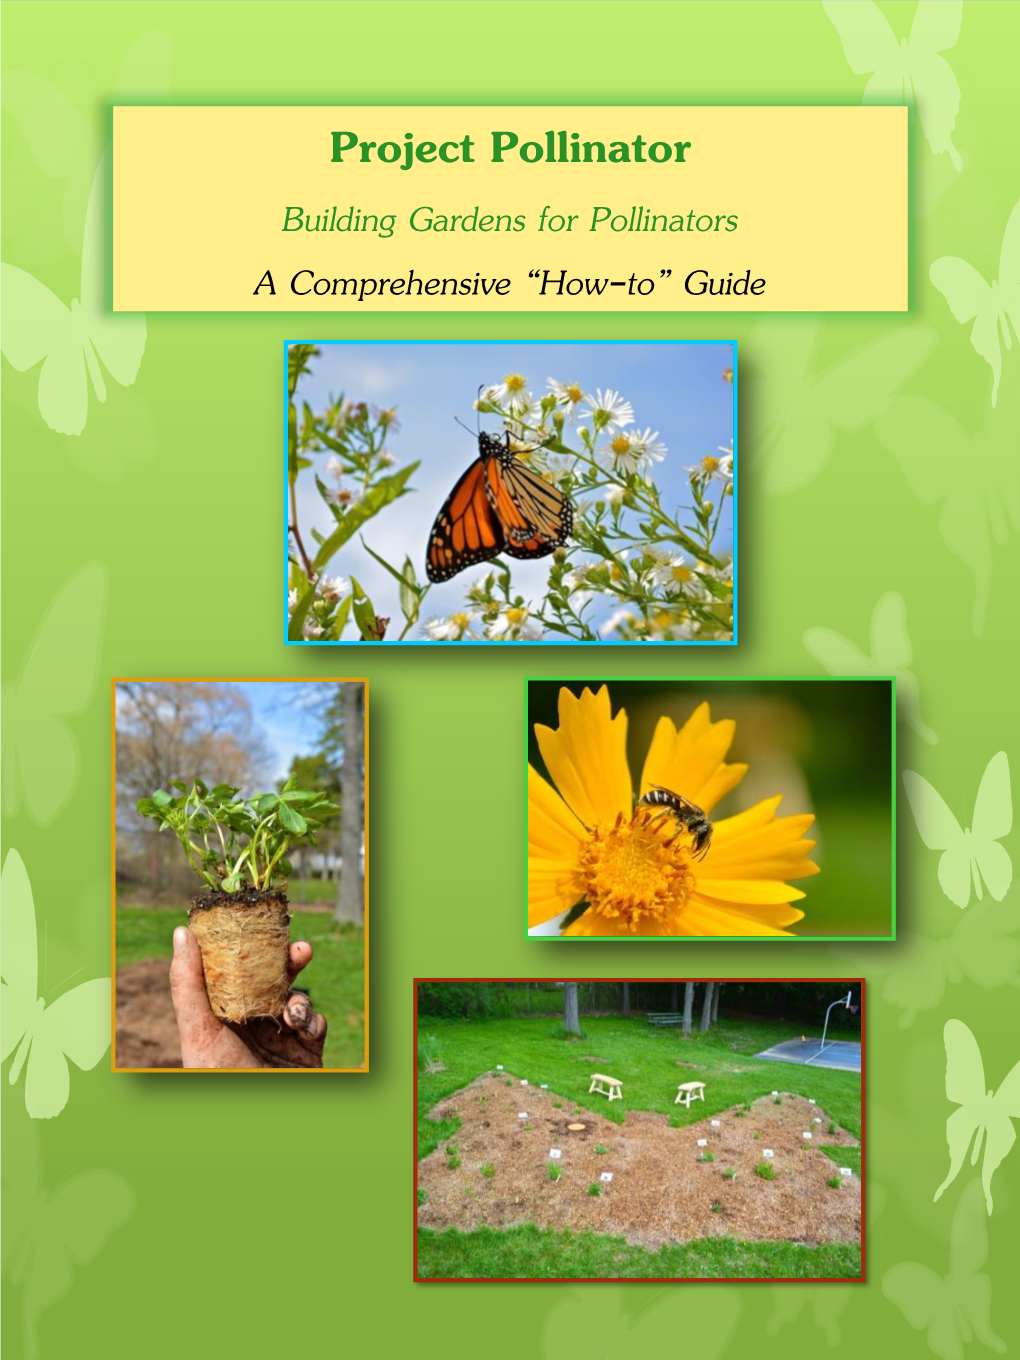 Project Pollinator Guide